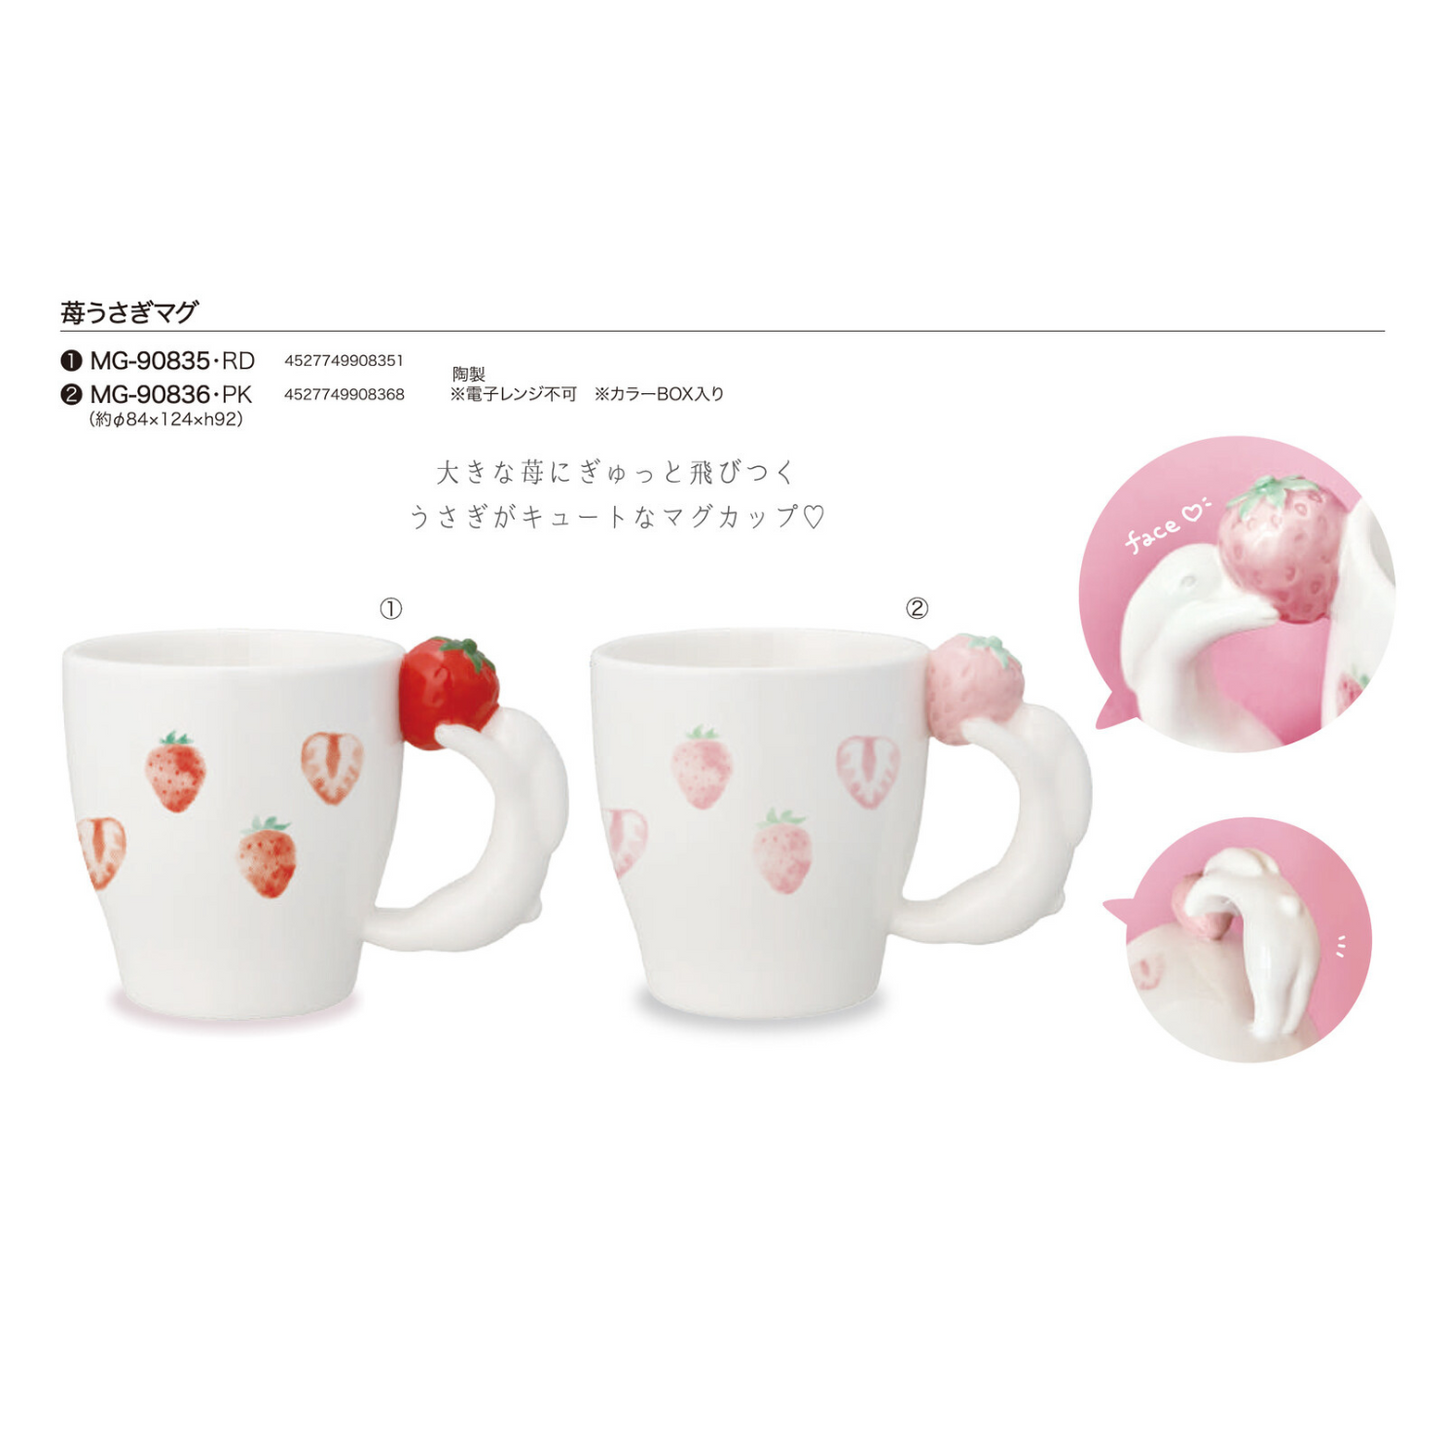 Decole Strawberry Rabbit Mug